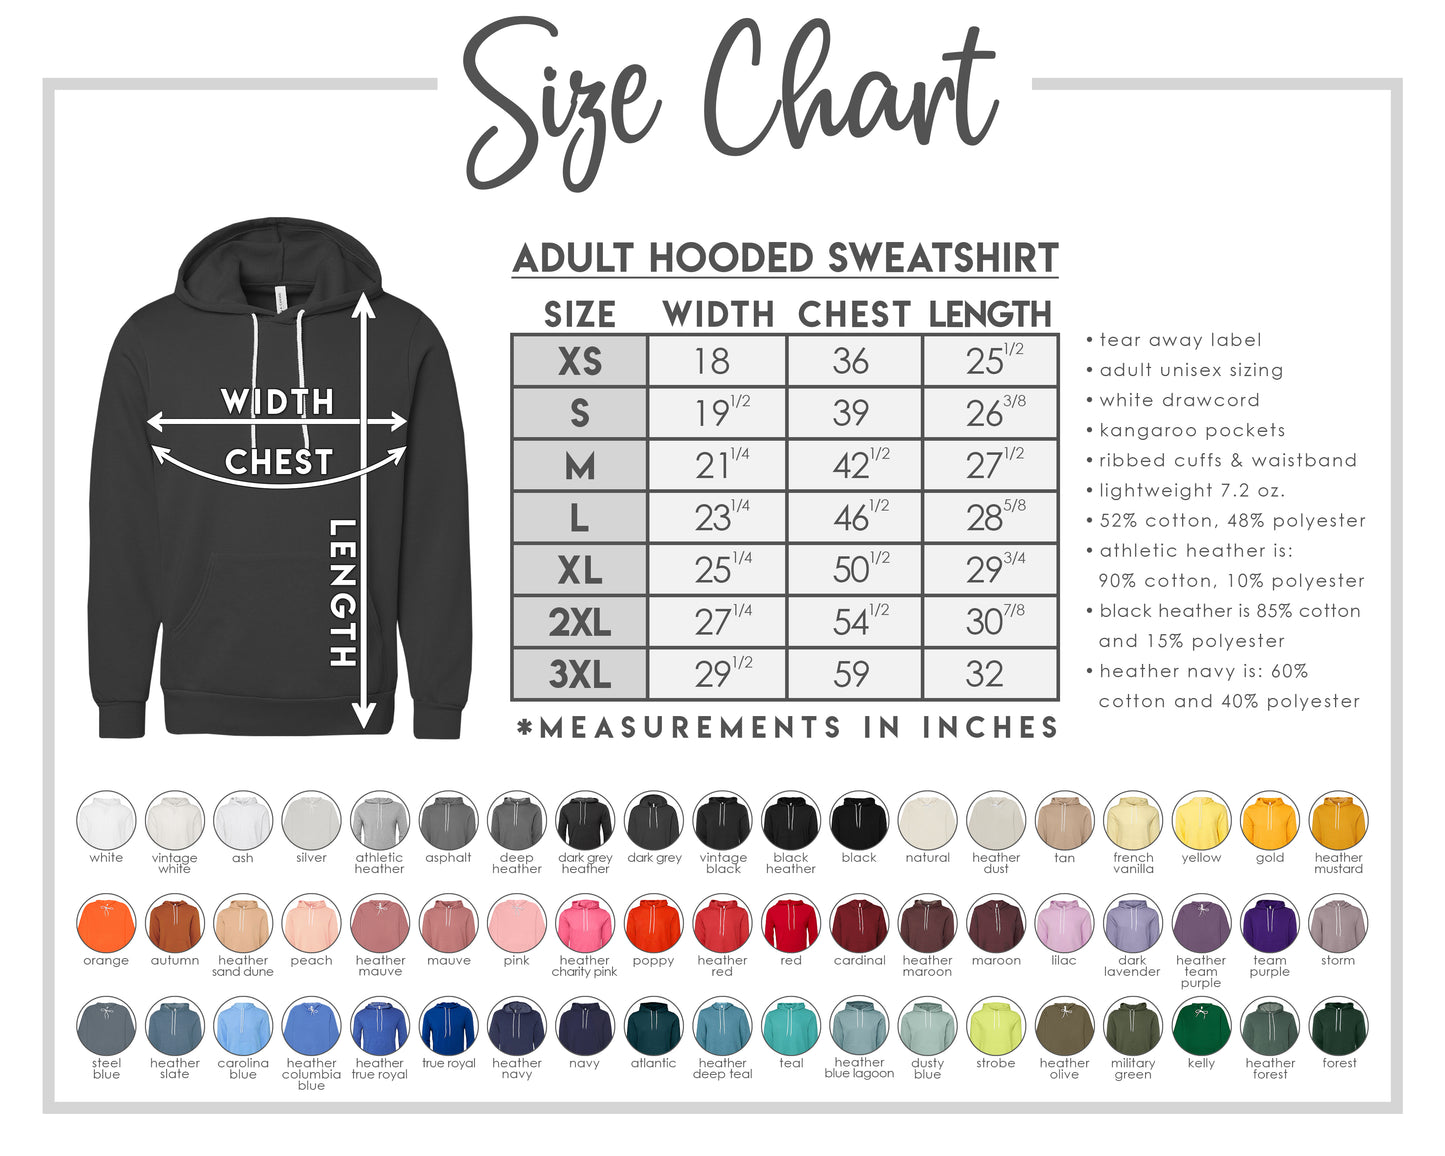 Adult Unisex "Morally Grey Is My Favorite Color" Sweatshirt